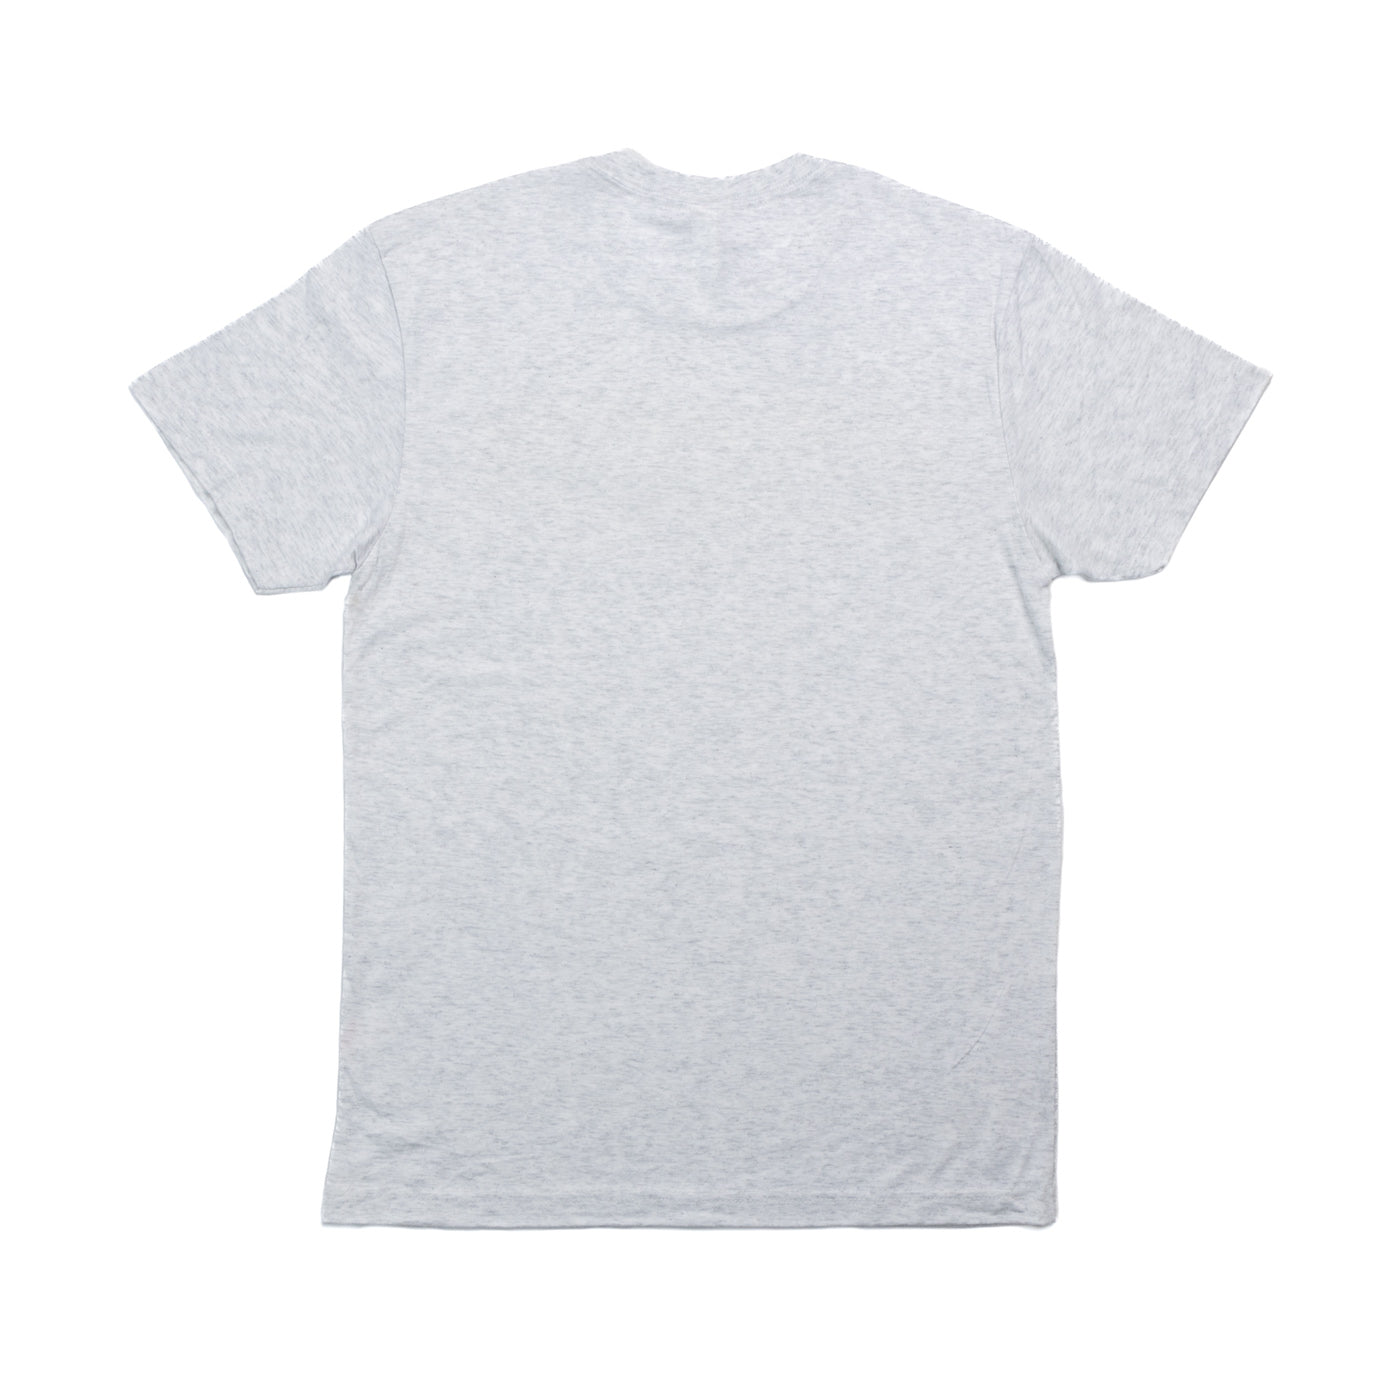 Trolley Pixel T-Shirt - Adult